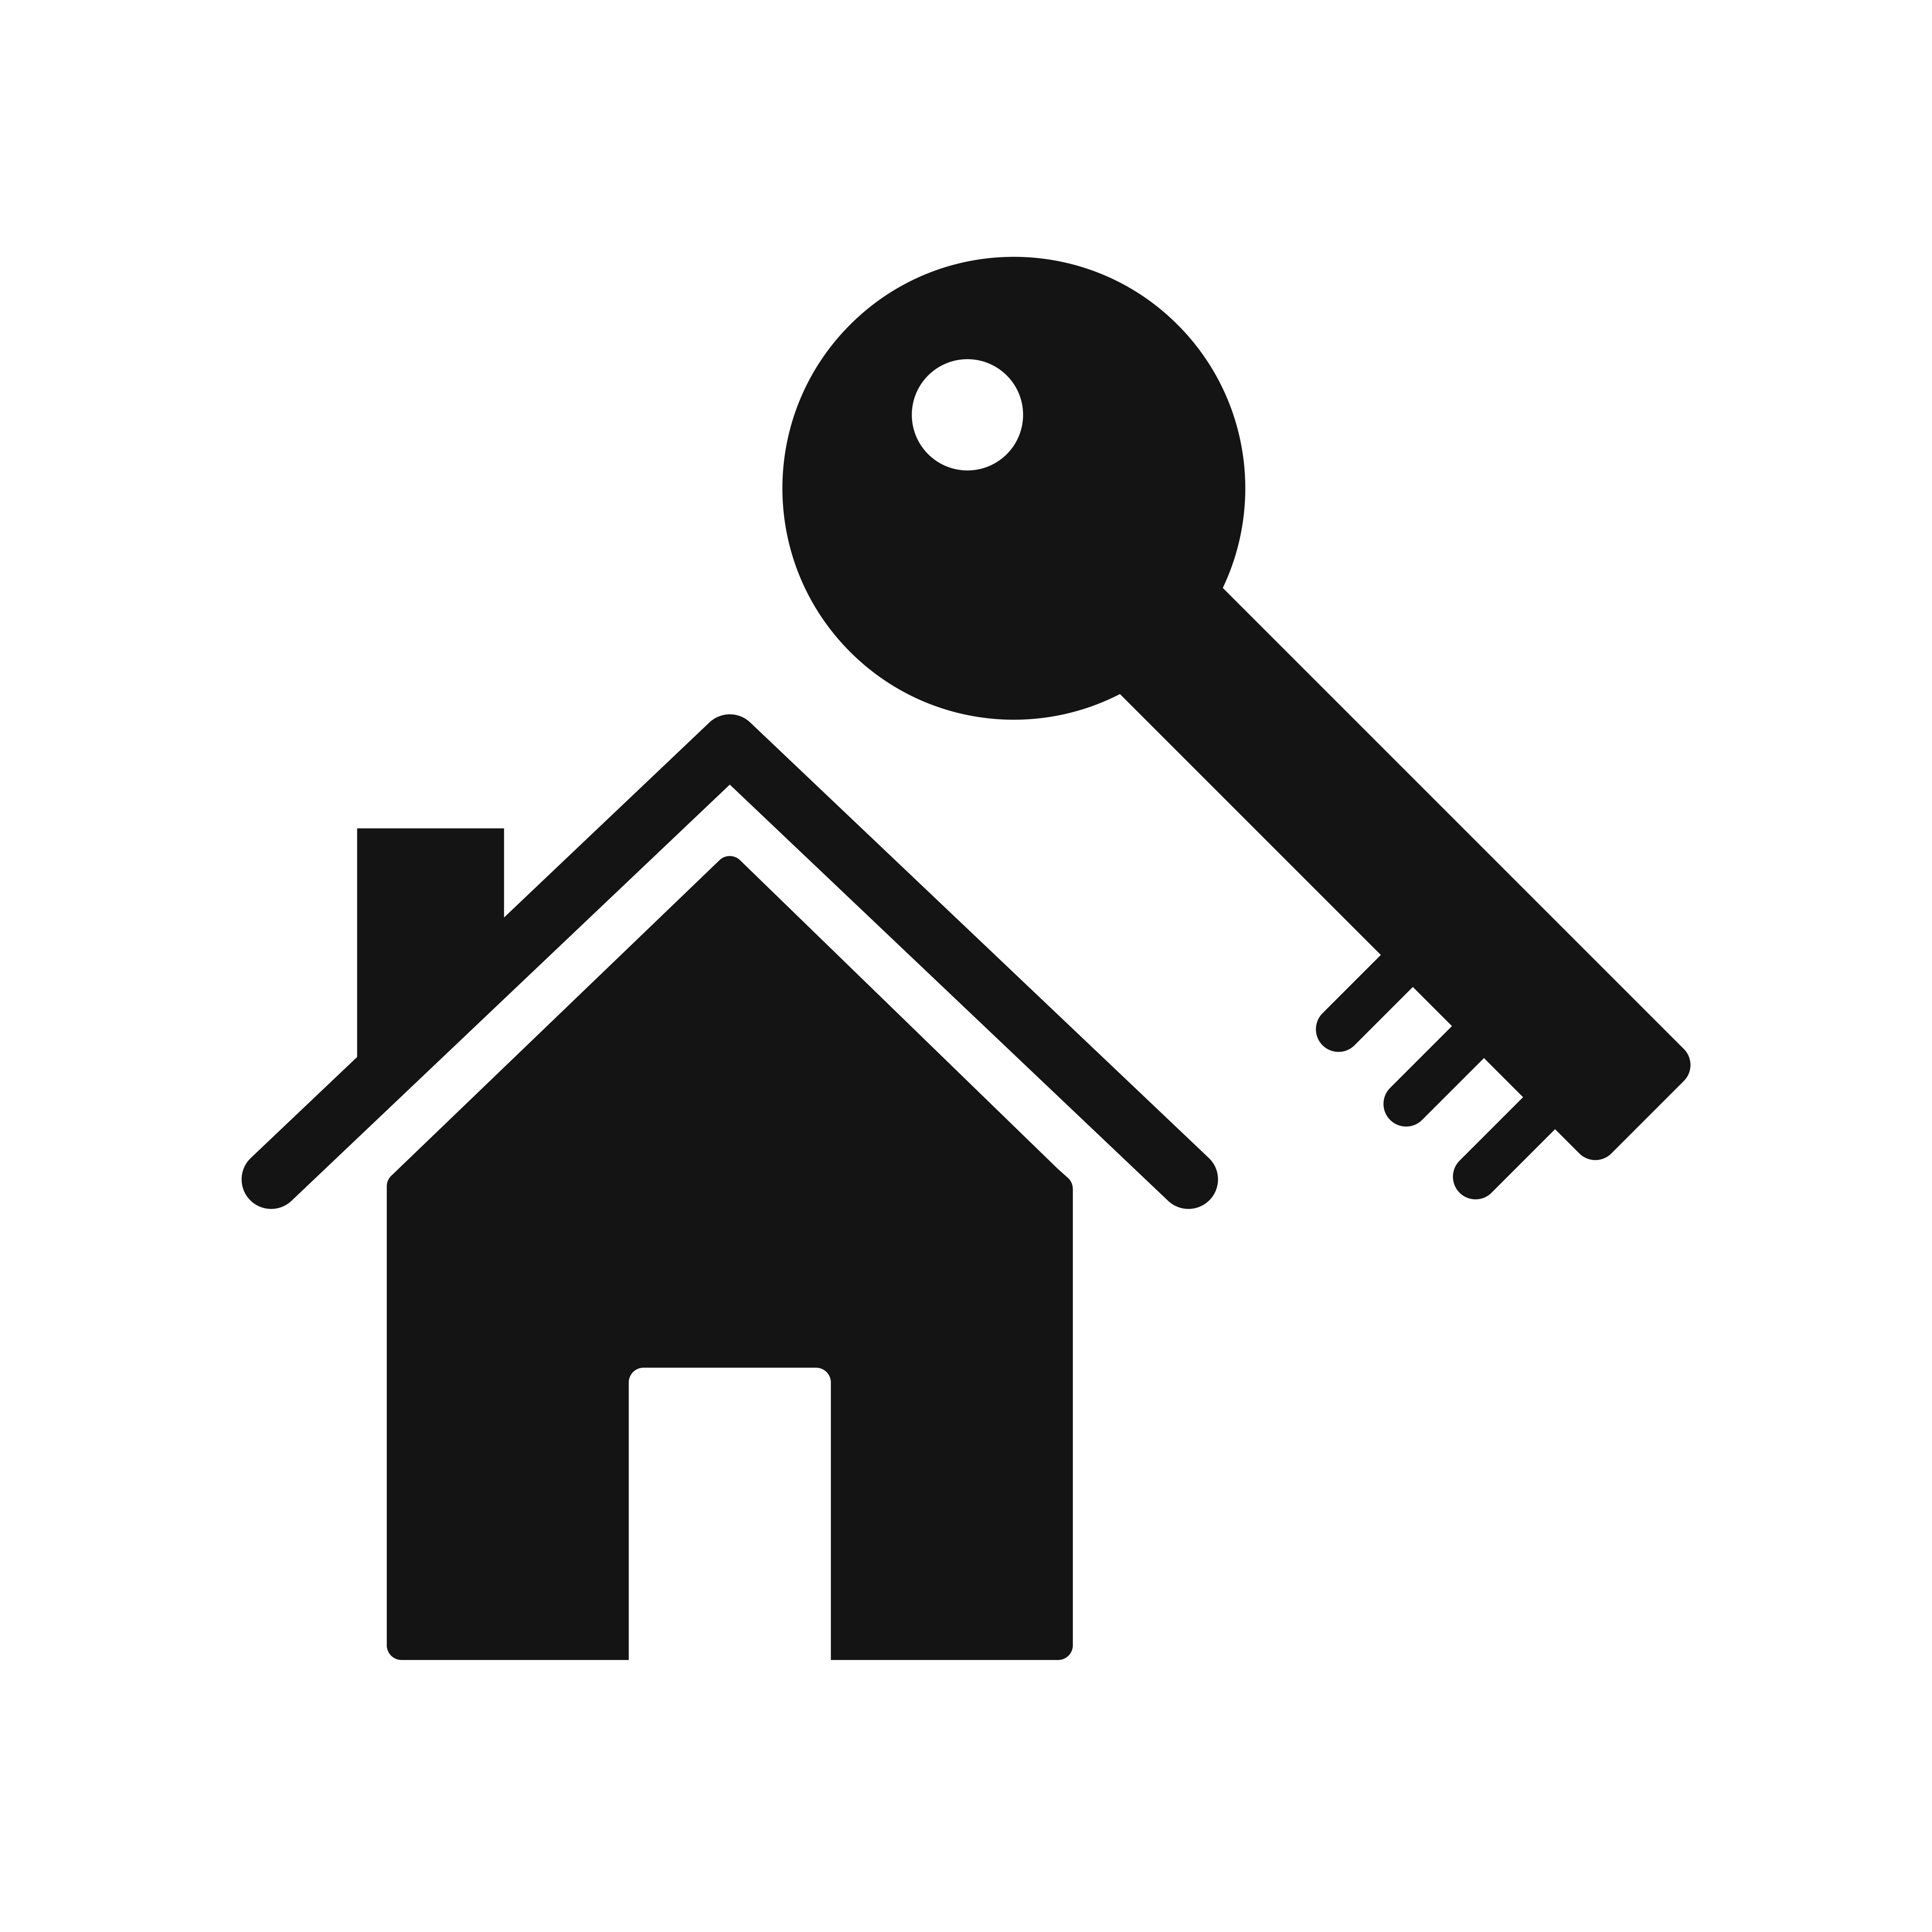 Download House Key Vector Icon 351749 - Download Free Vectors ...